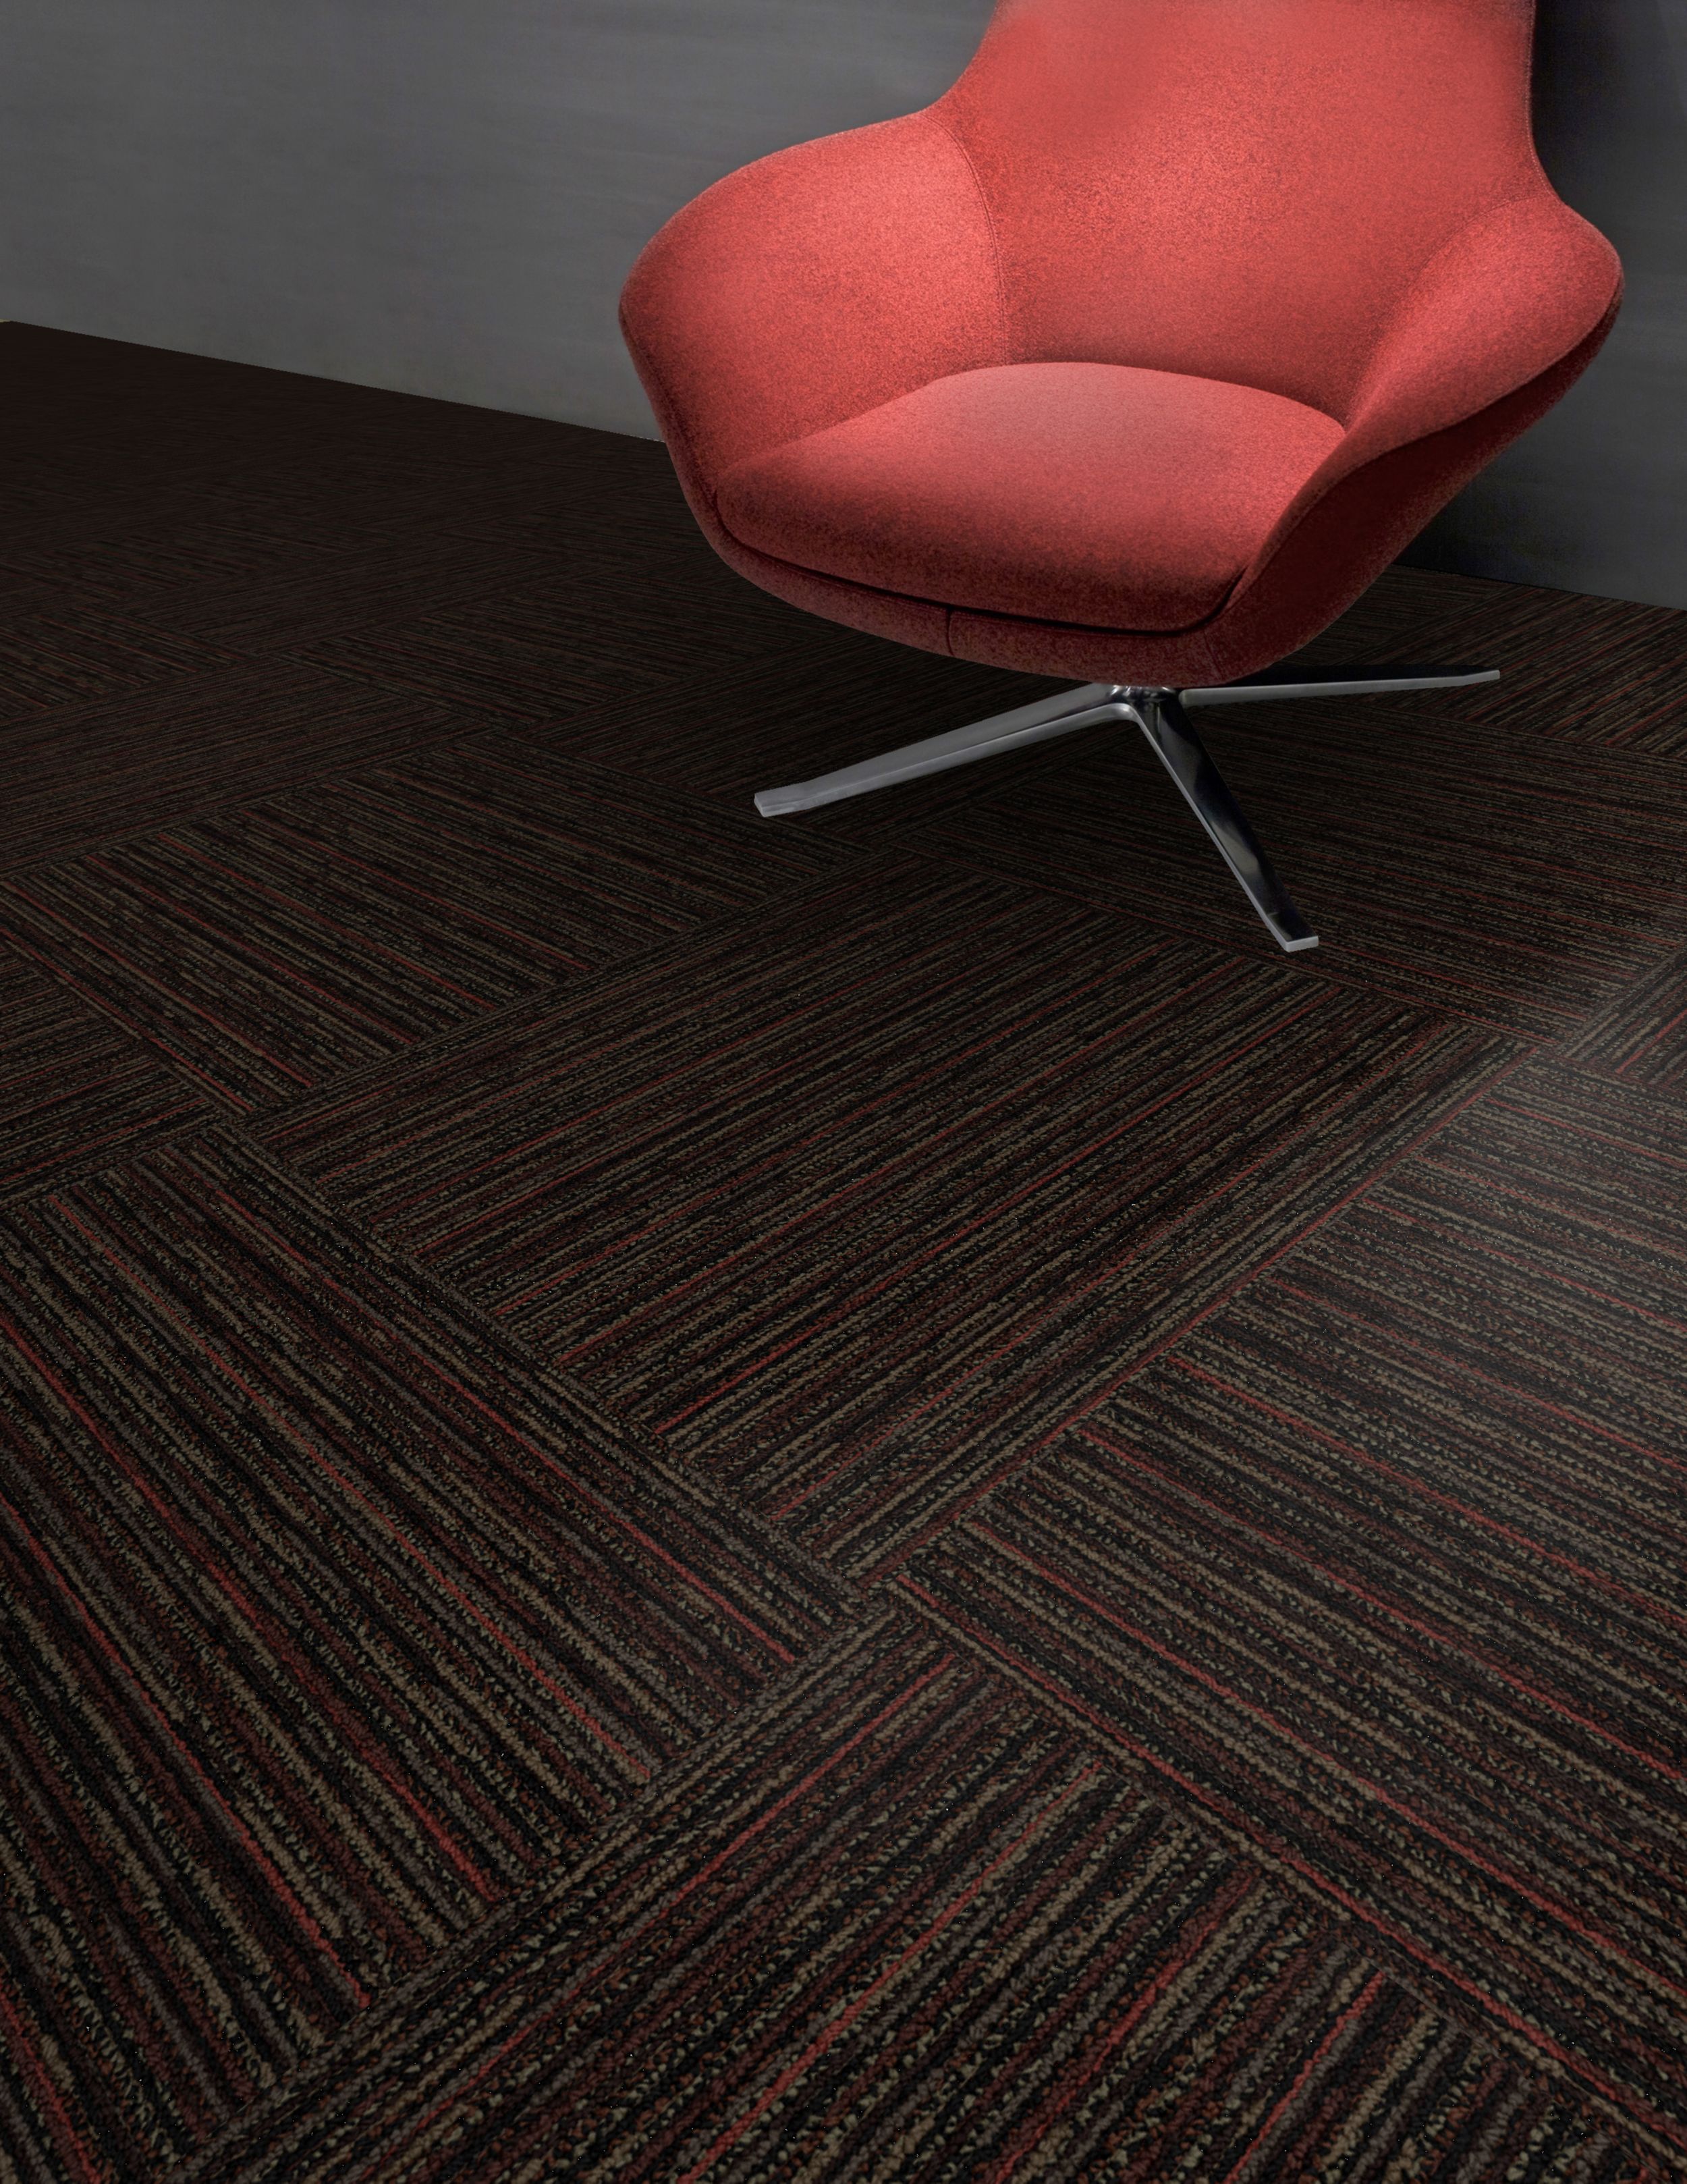 Interface Farmland Loop carpet tile wiith coral colored chair numéro d’image 2